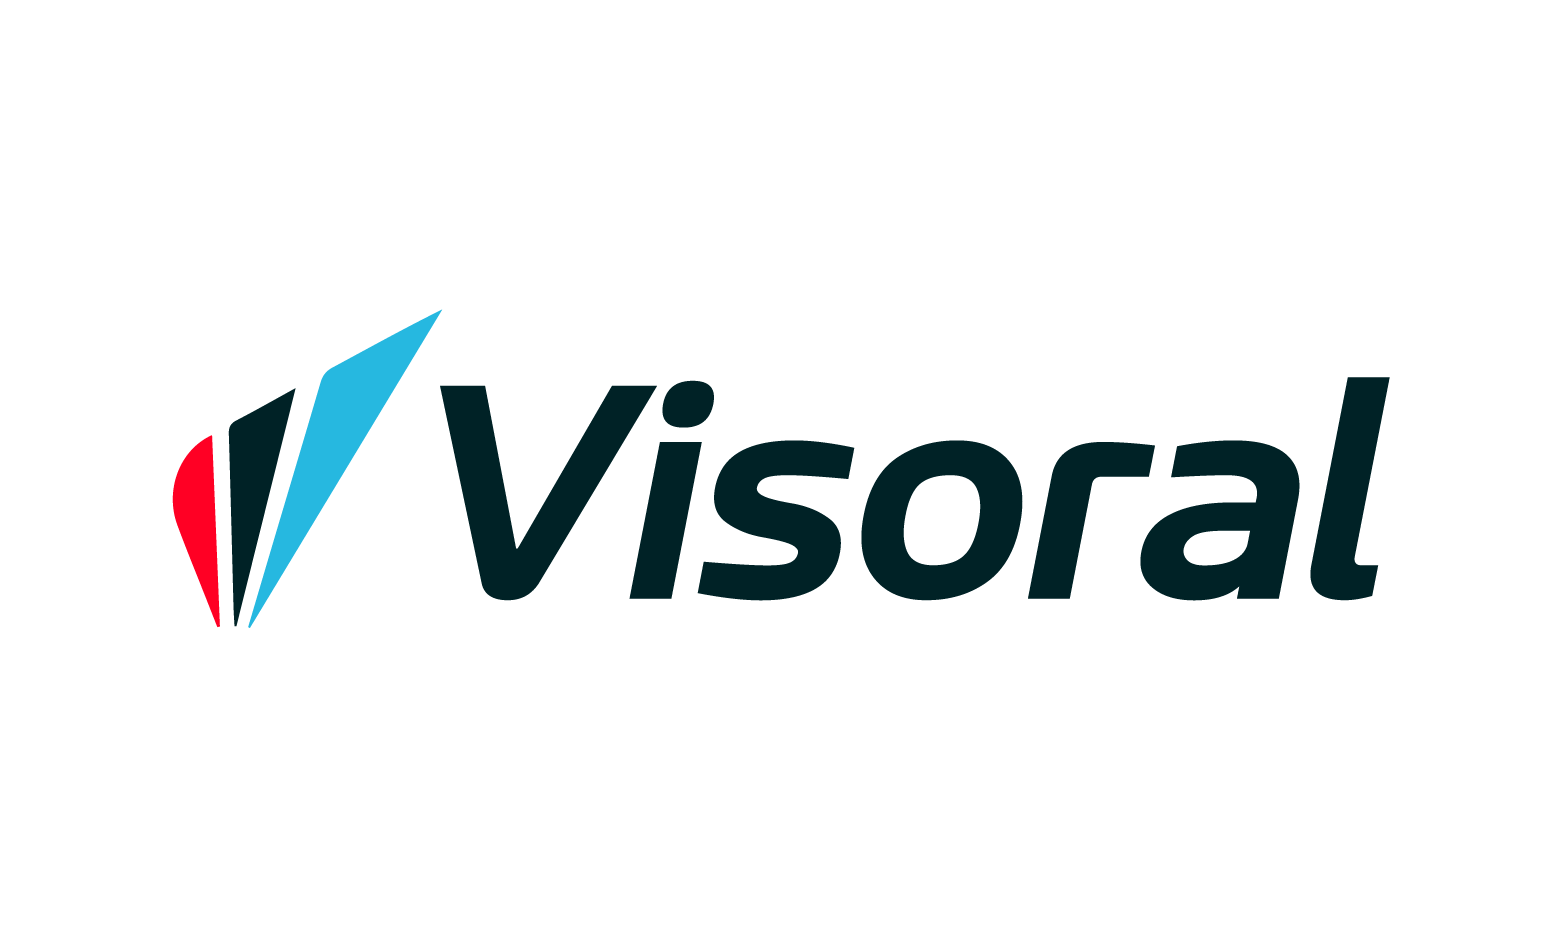 Visoral.com - Creative brandable domain for sale